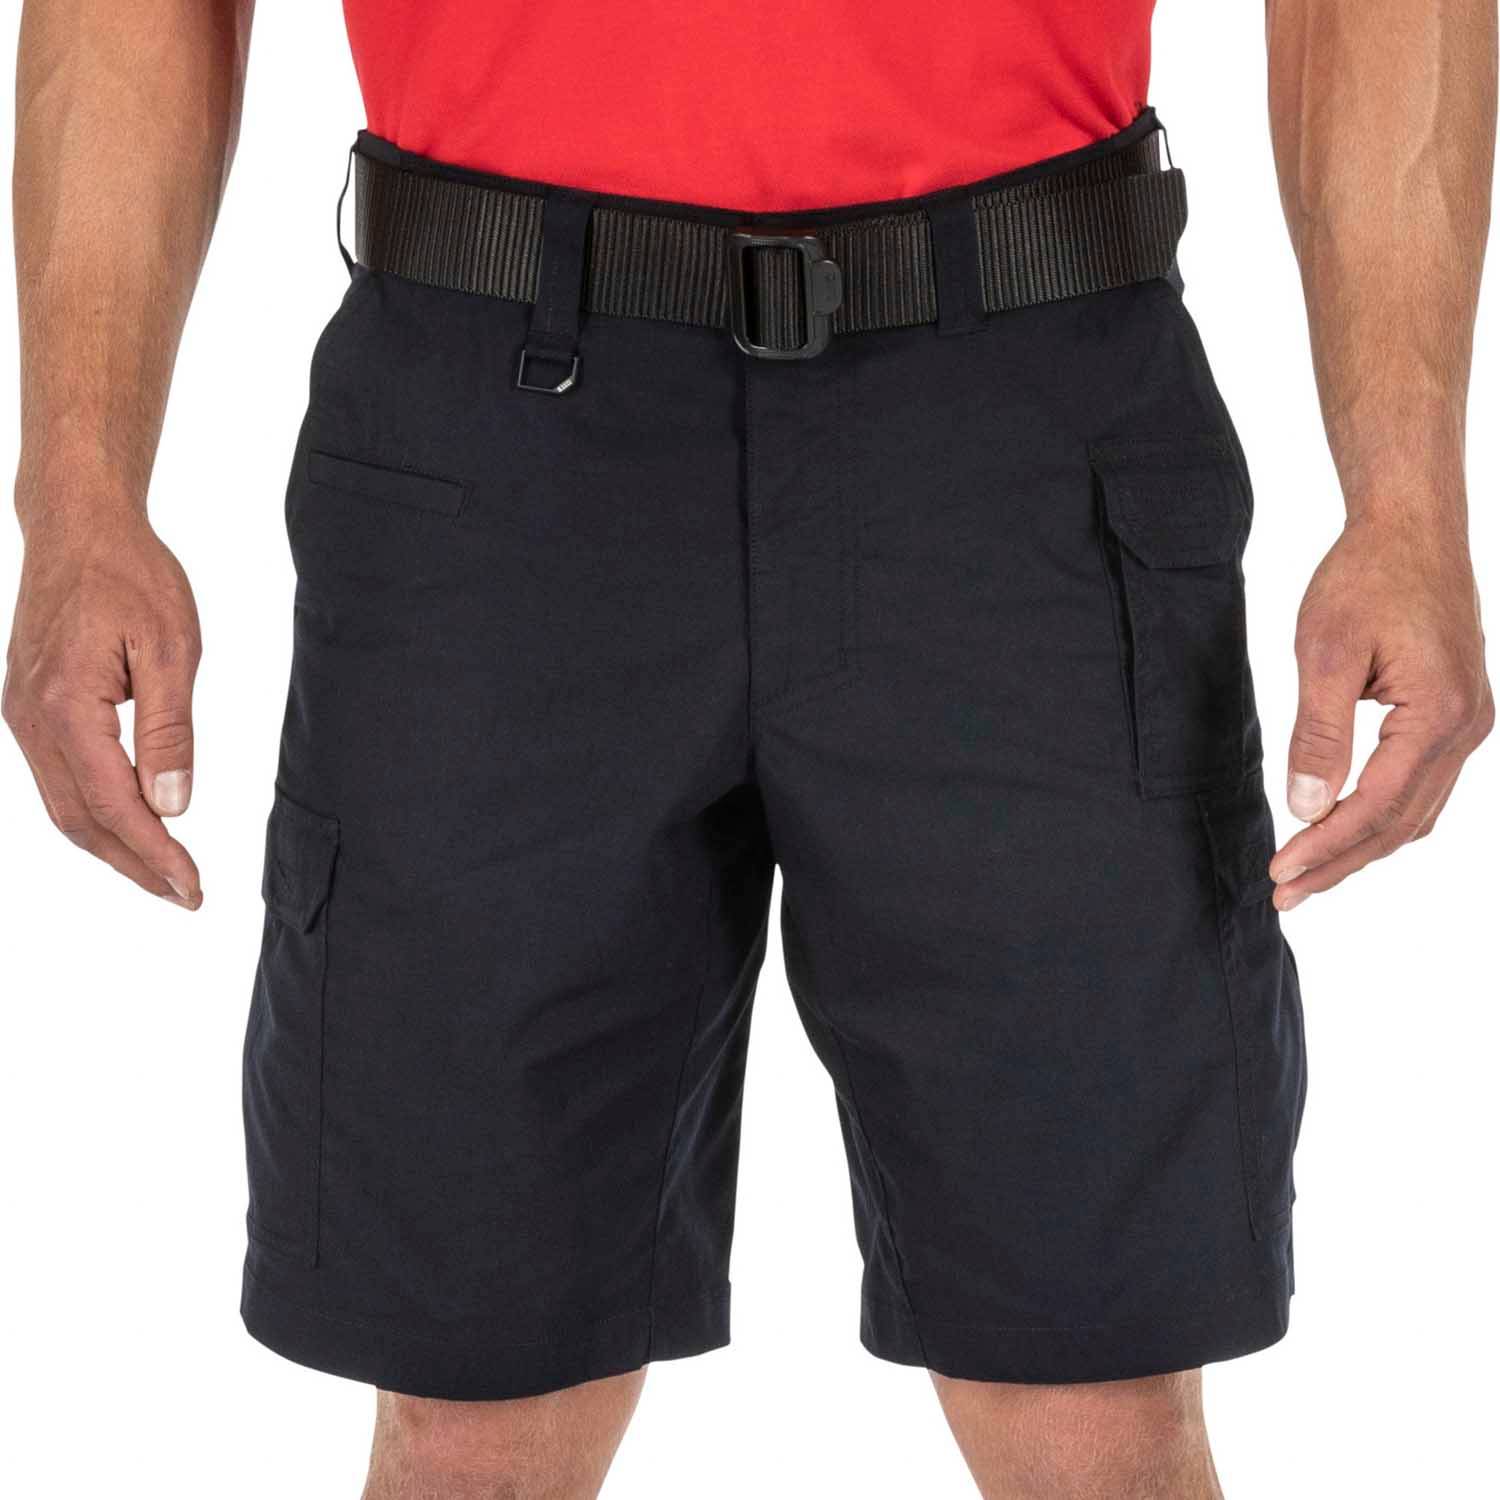 5.11 Tactical ABR Pro Cargo Shorts | 5.11 Tactical Shorts